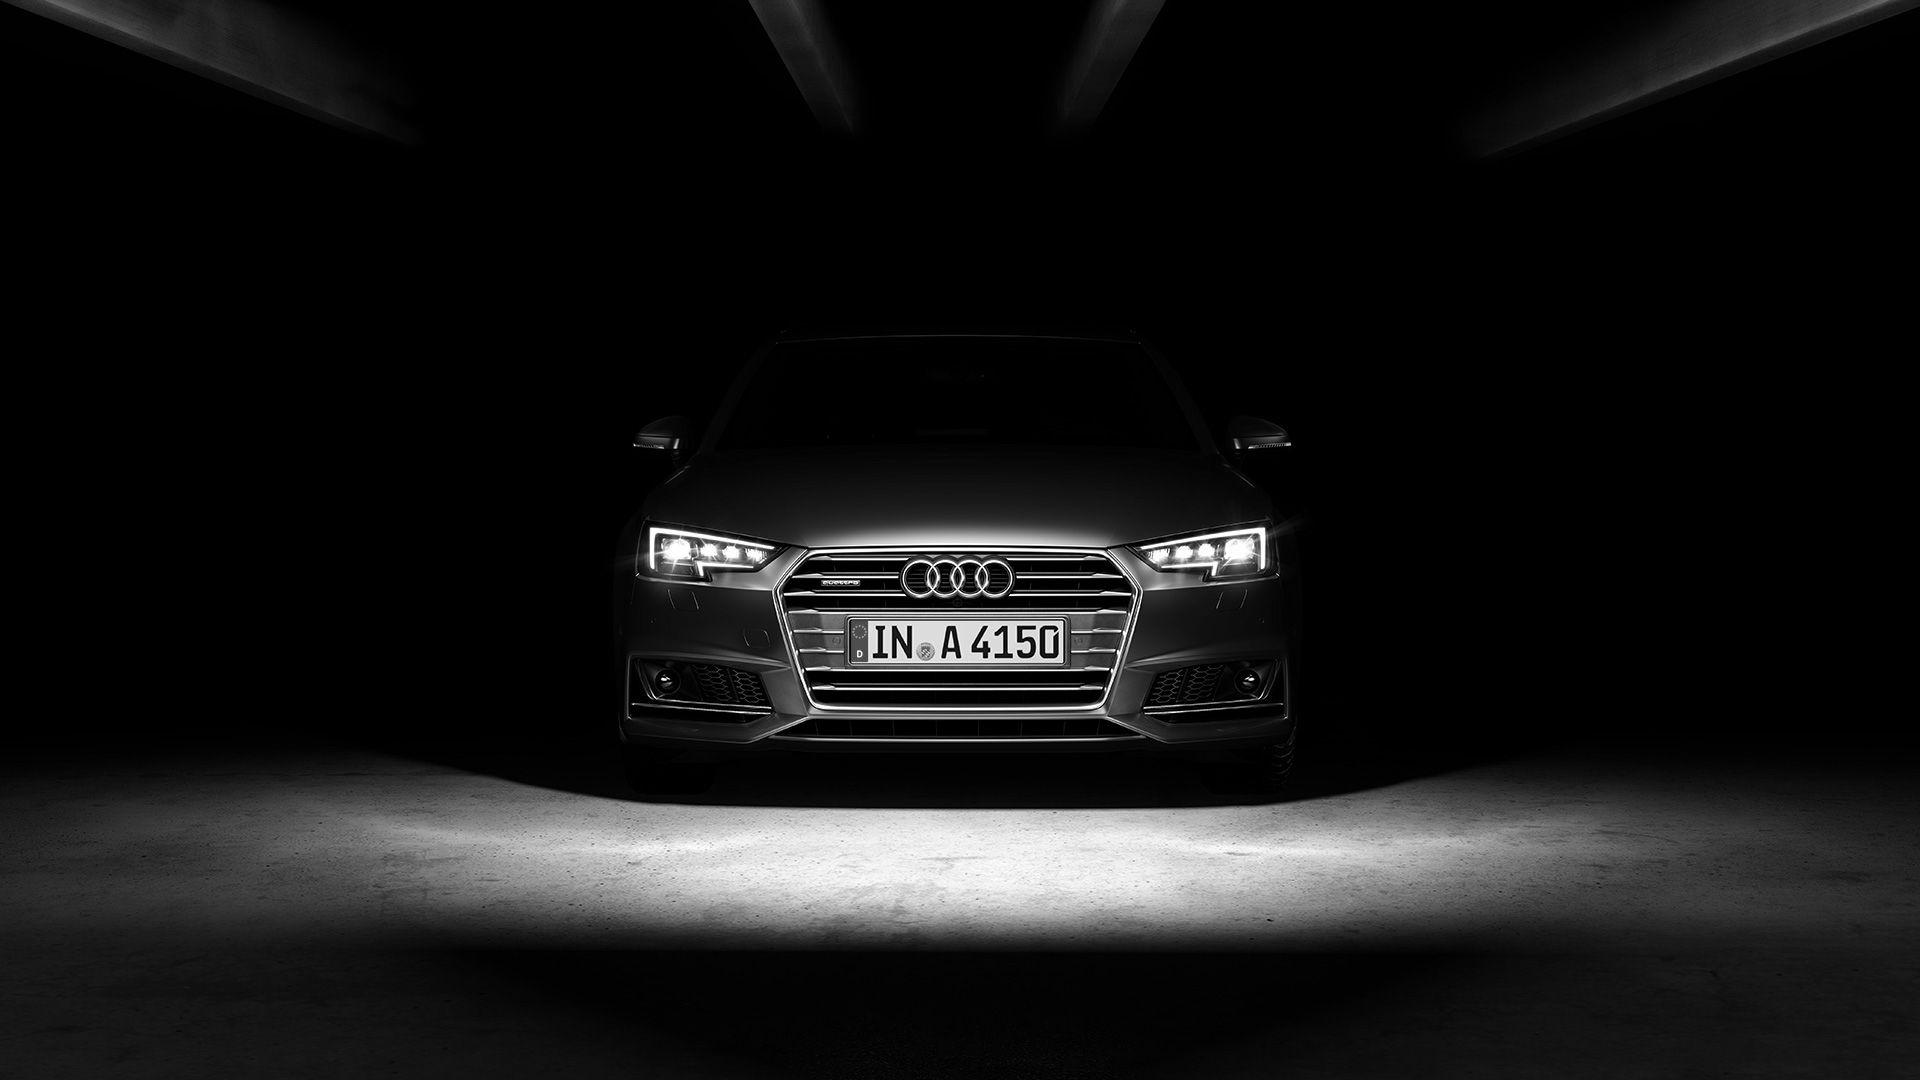 Audi A4 Wallpapers Wallpaper Cave Images, Photos, Reviews